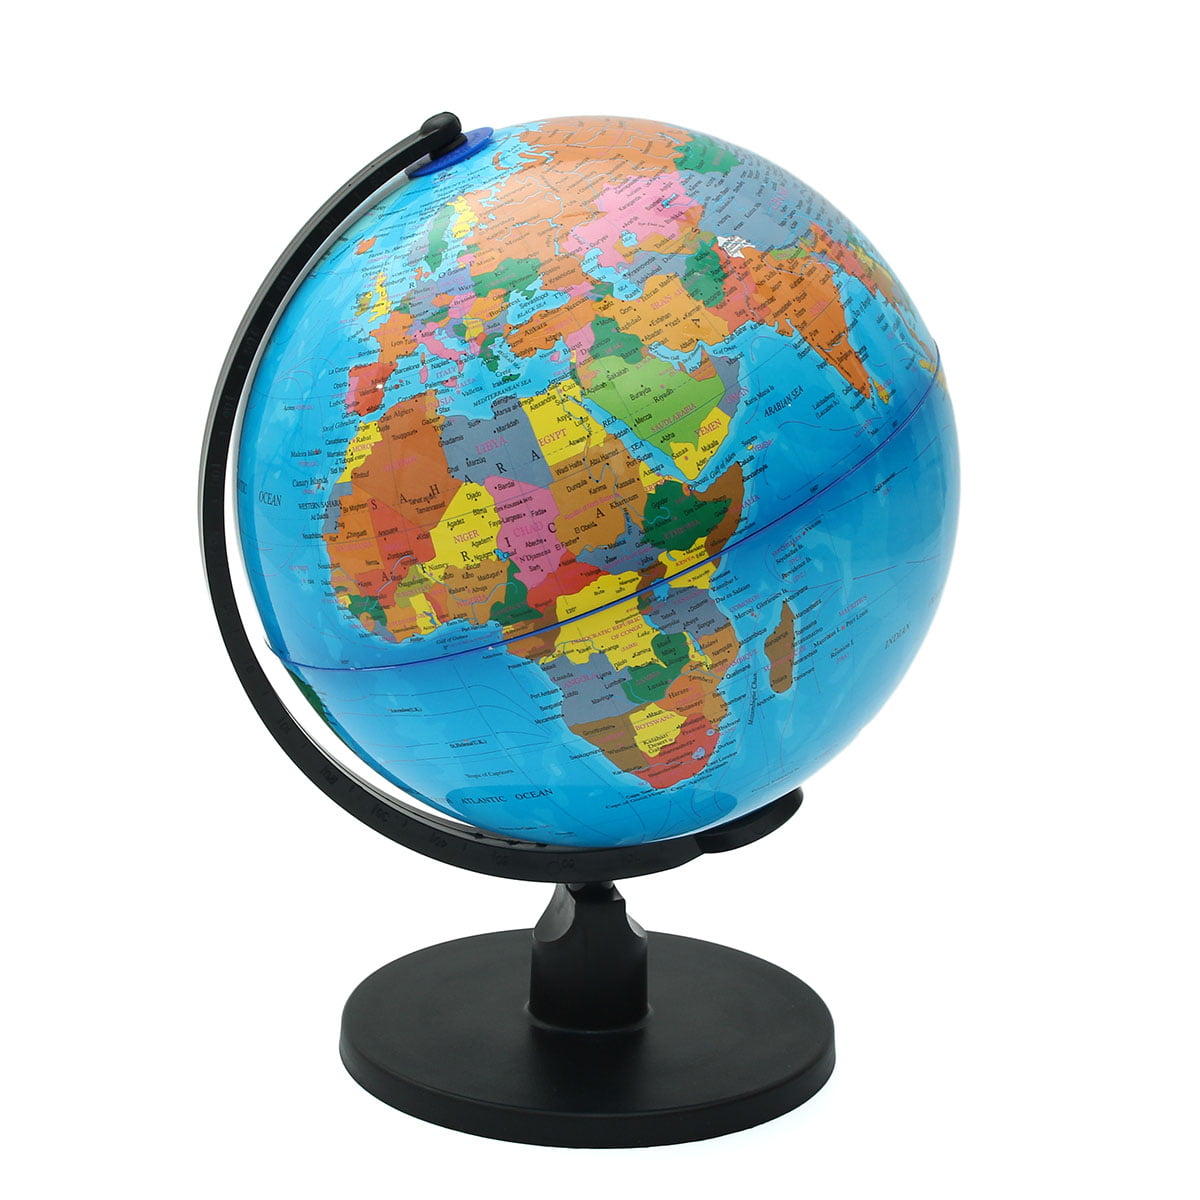 Education Global Home Office Classroom Desk Furnishings Blue Creative Gift School Globes World Stainless Steel Bracket Large Globe Rotating World Map